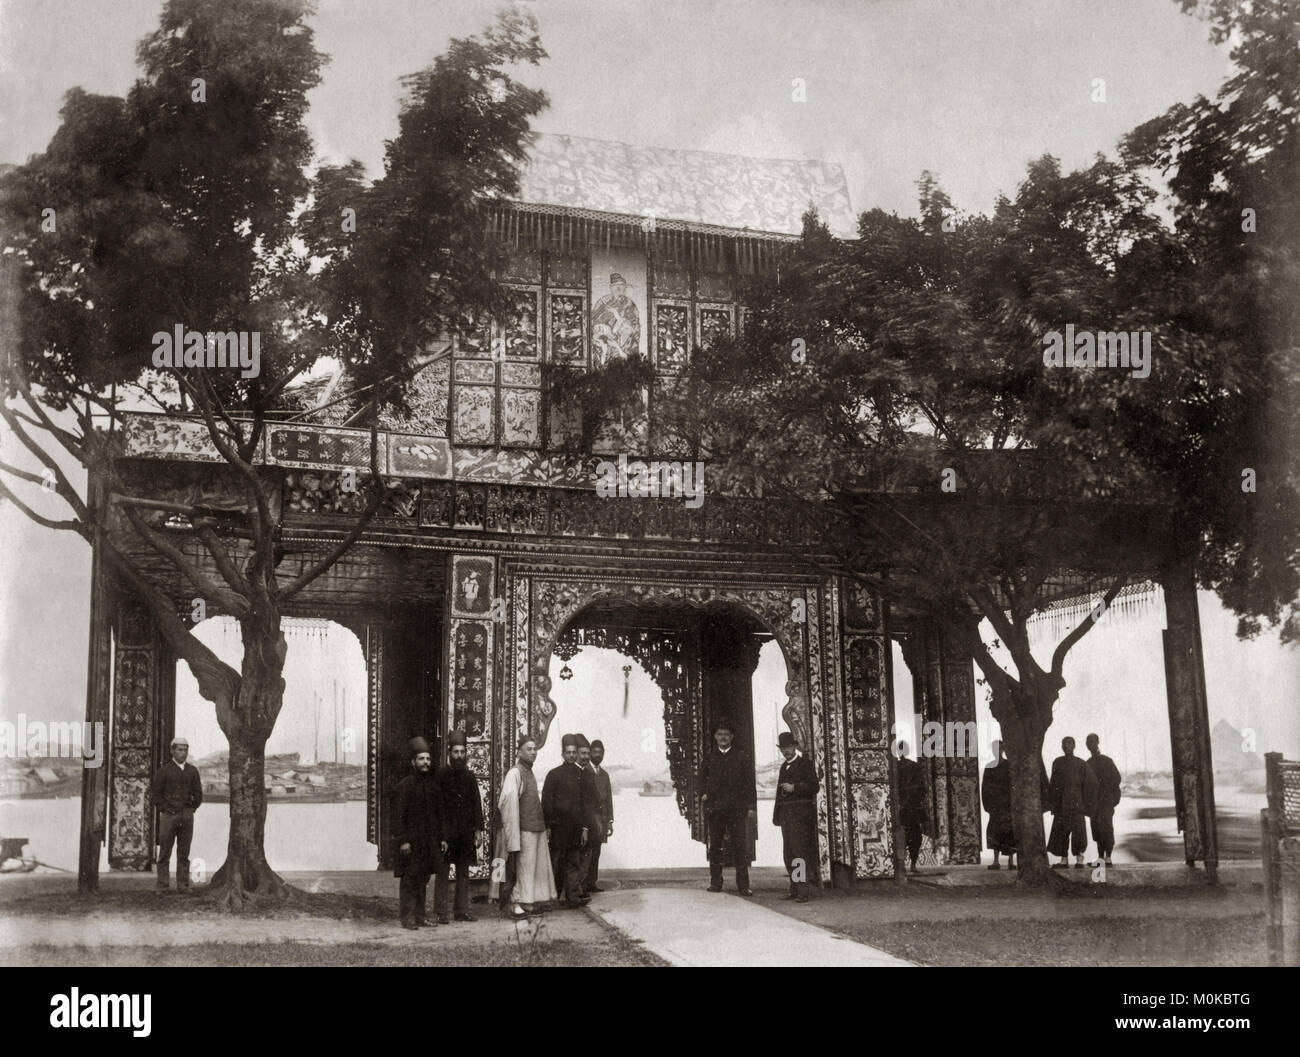 Arco cerimoniale, Canton, Cina, c.1890's Foto Stock